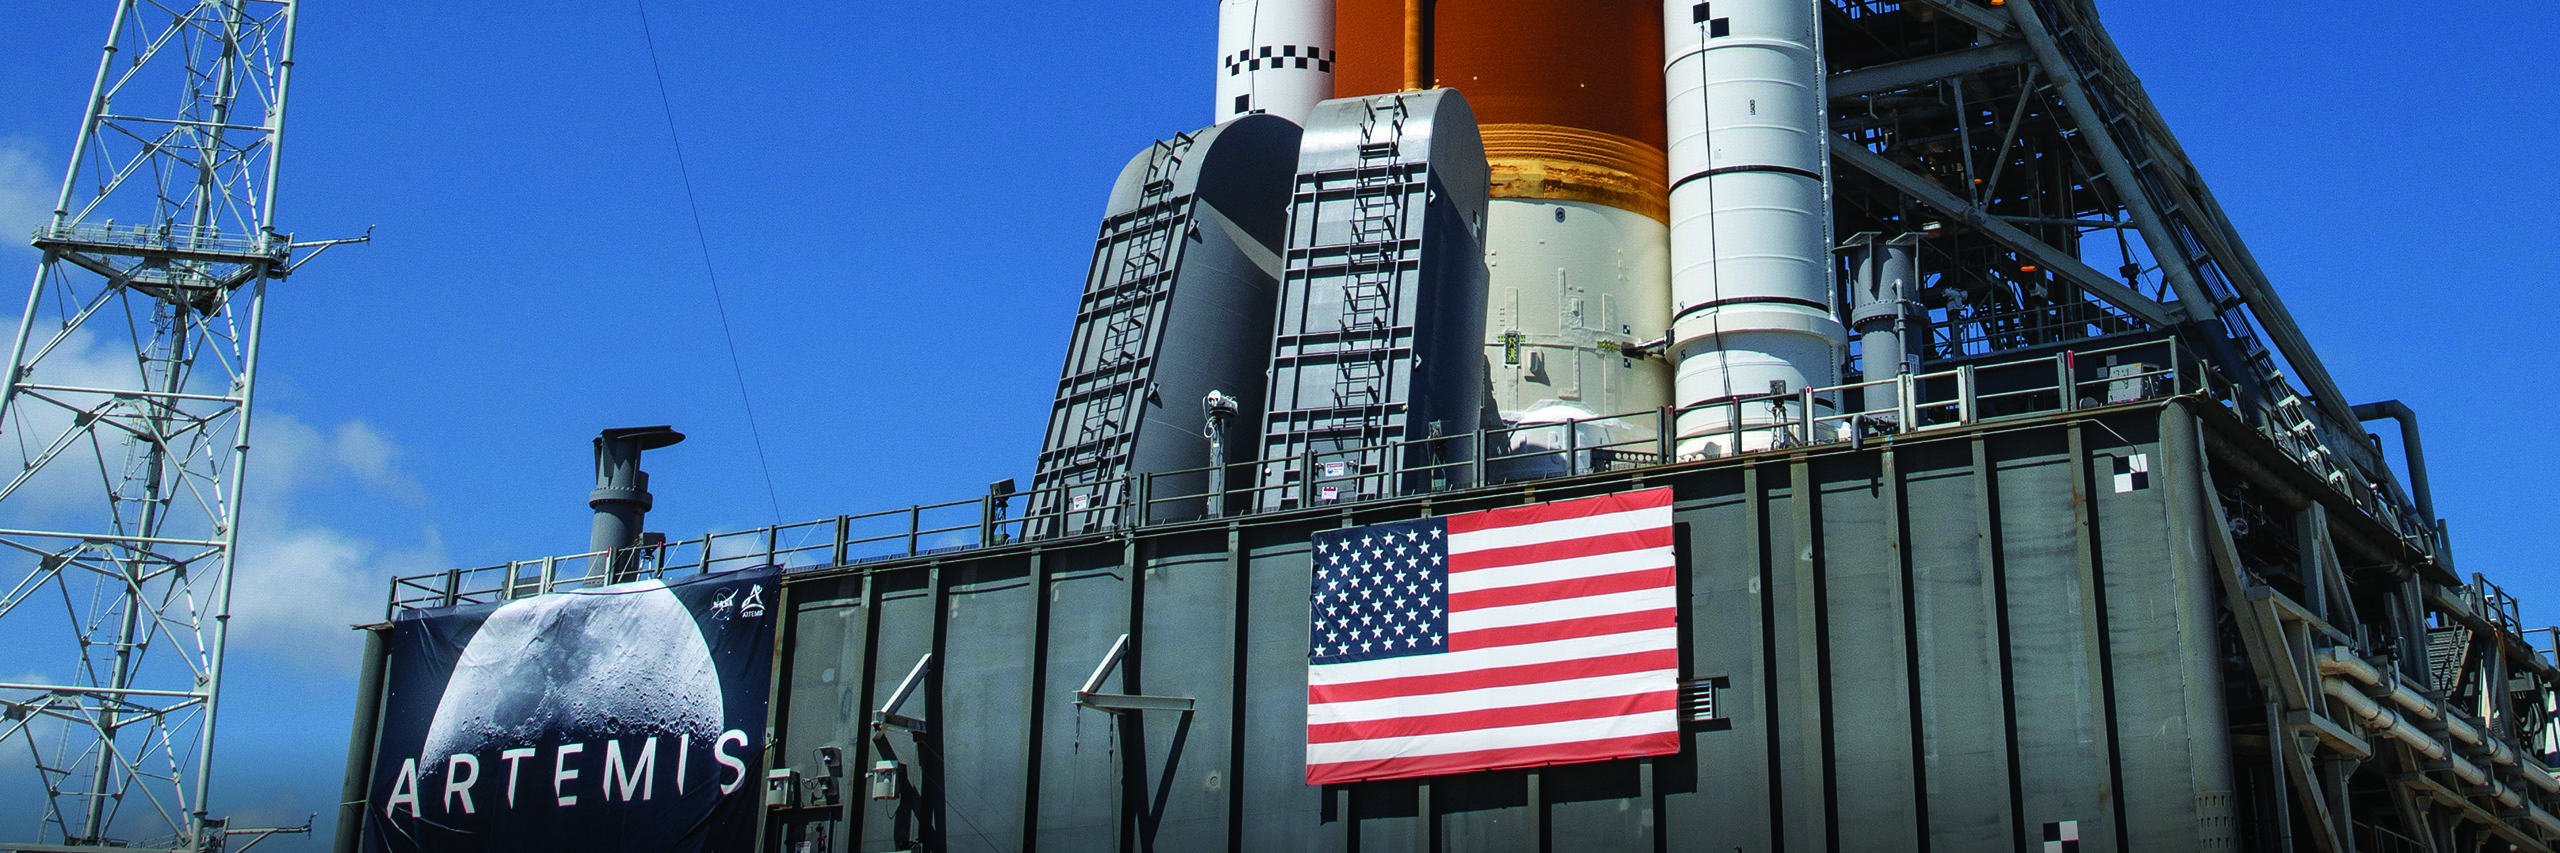 View of lower part of NASA SLS rocket atop Mobile Launch Platform